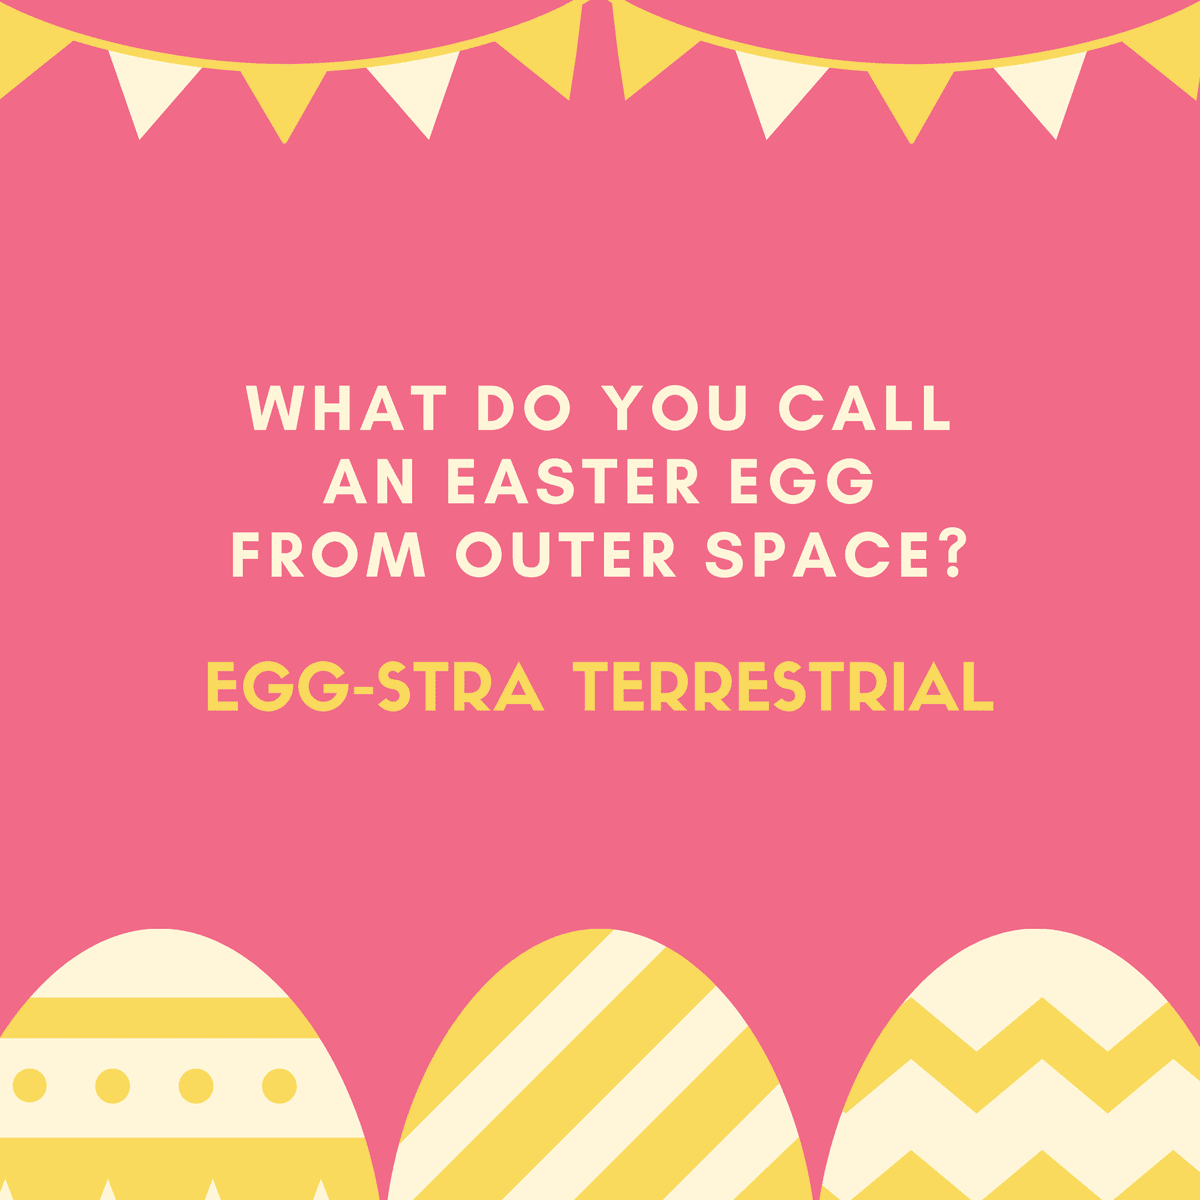 Egg-stra terrestrial